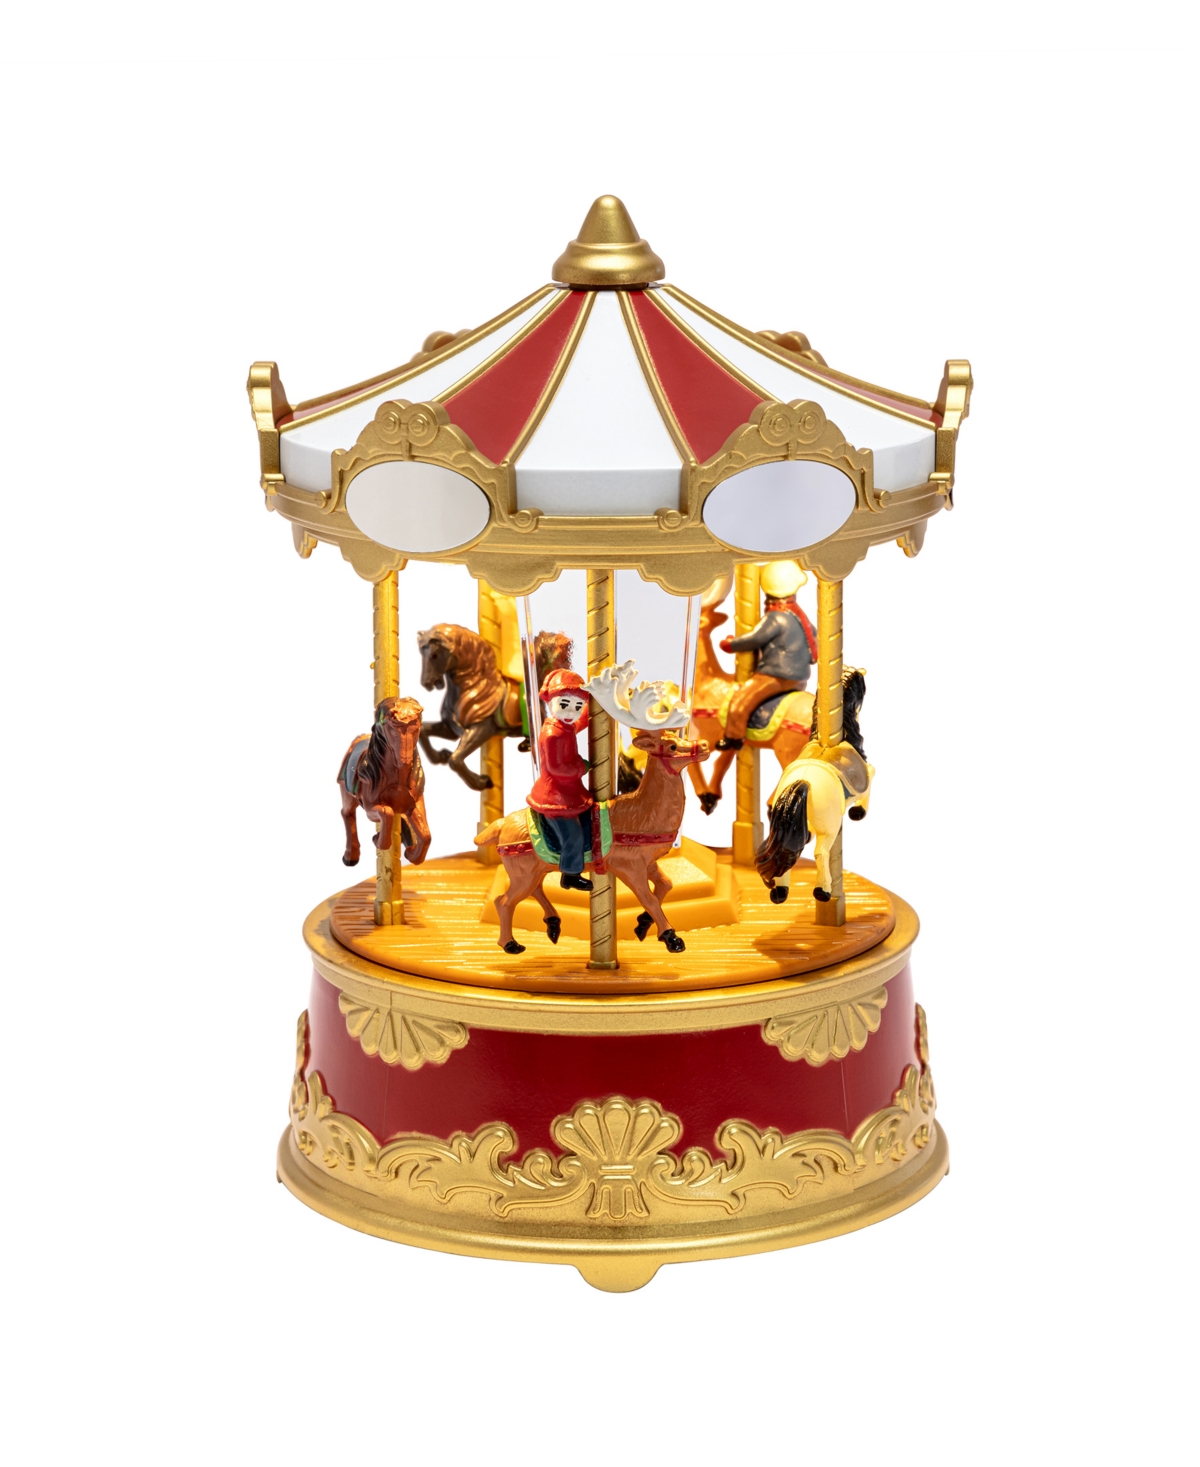 Mr. Christmas 5.75" Animated Musical Carousel In Multi